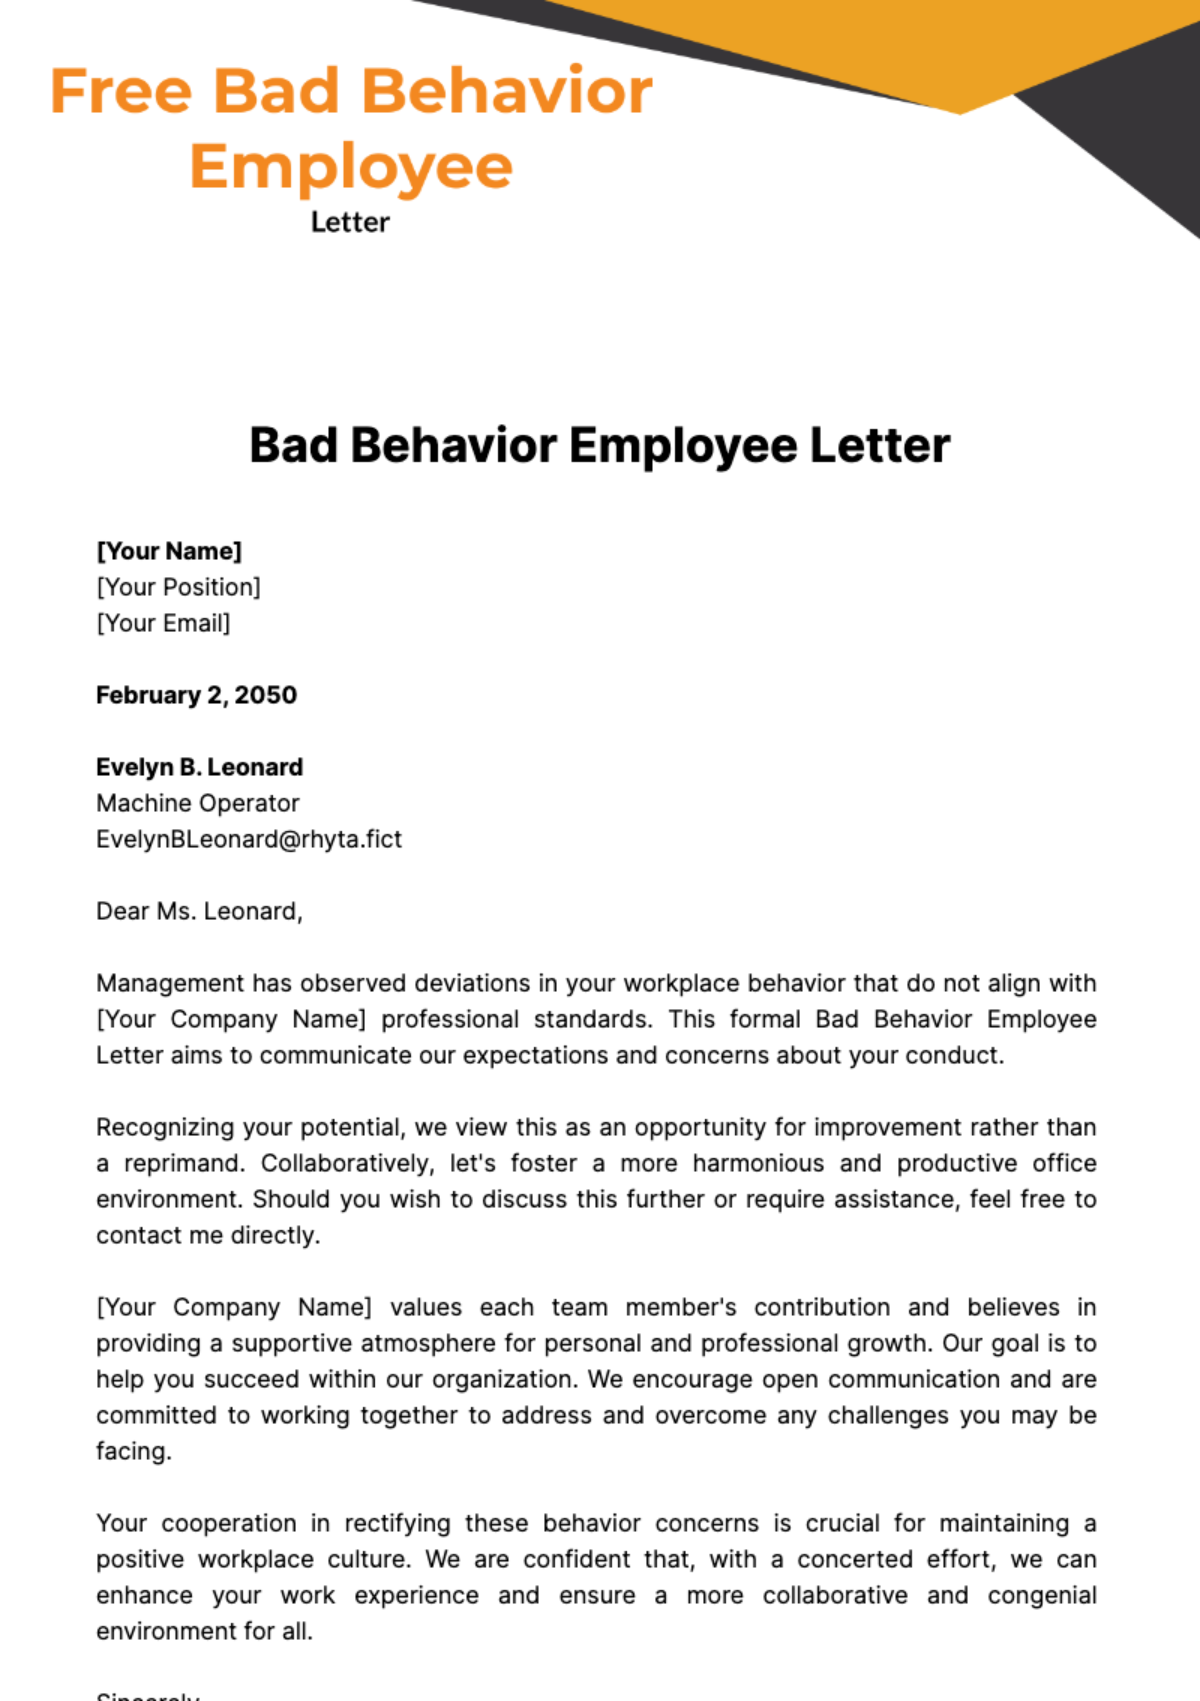 Free Bad Behavior Employee Letter Template